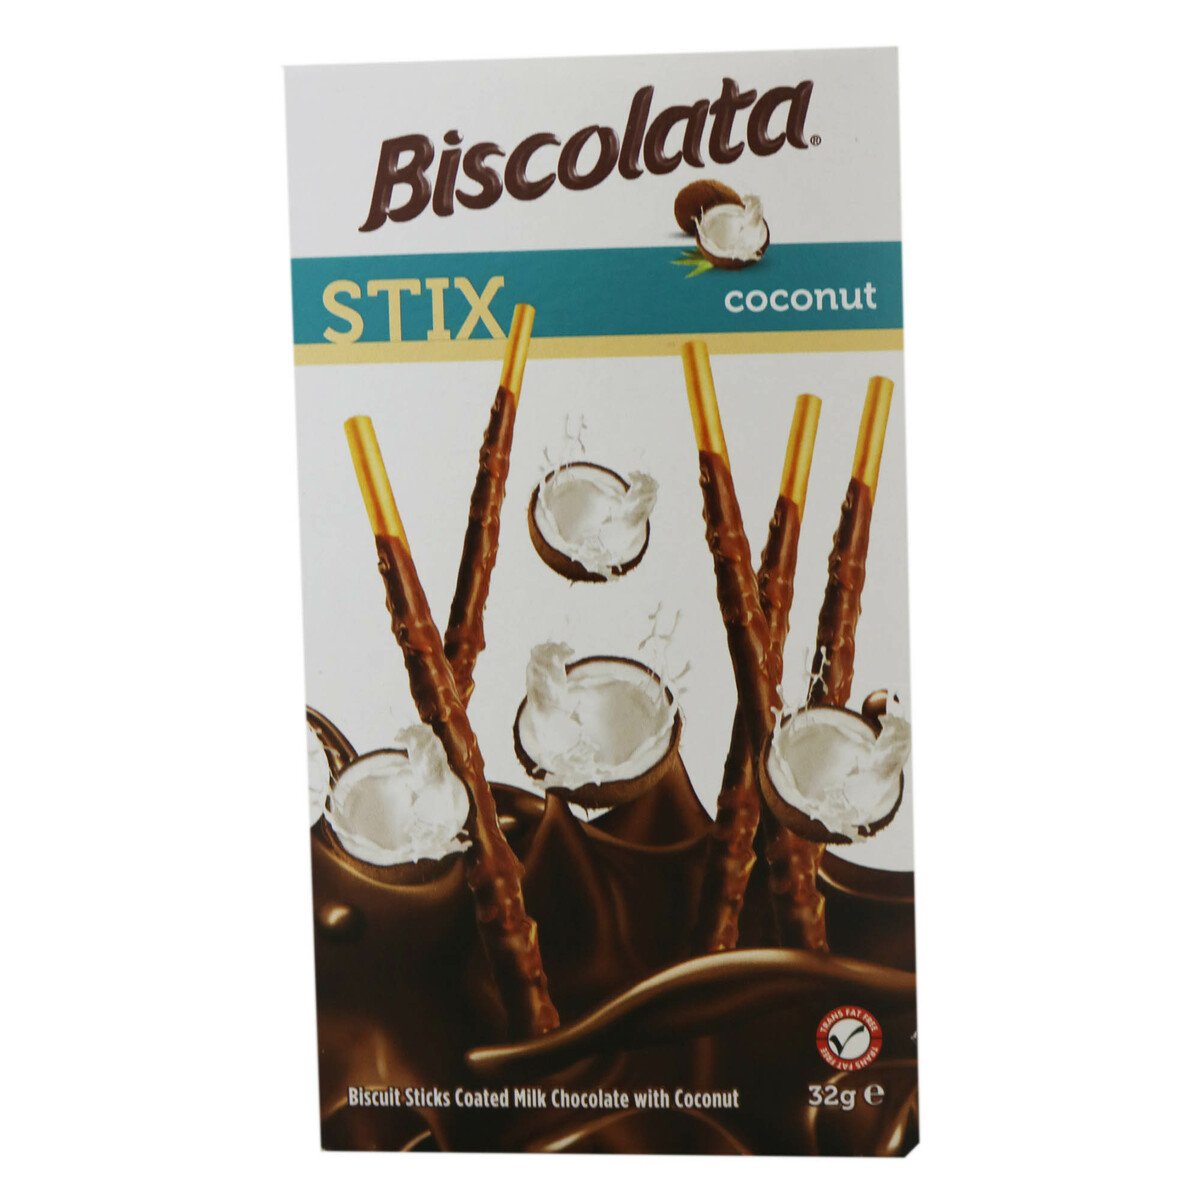 Biscolata Stix Coconut Biscuit 42g